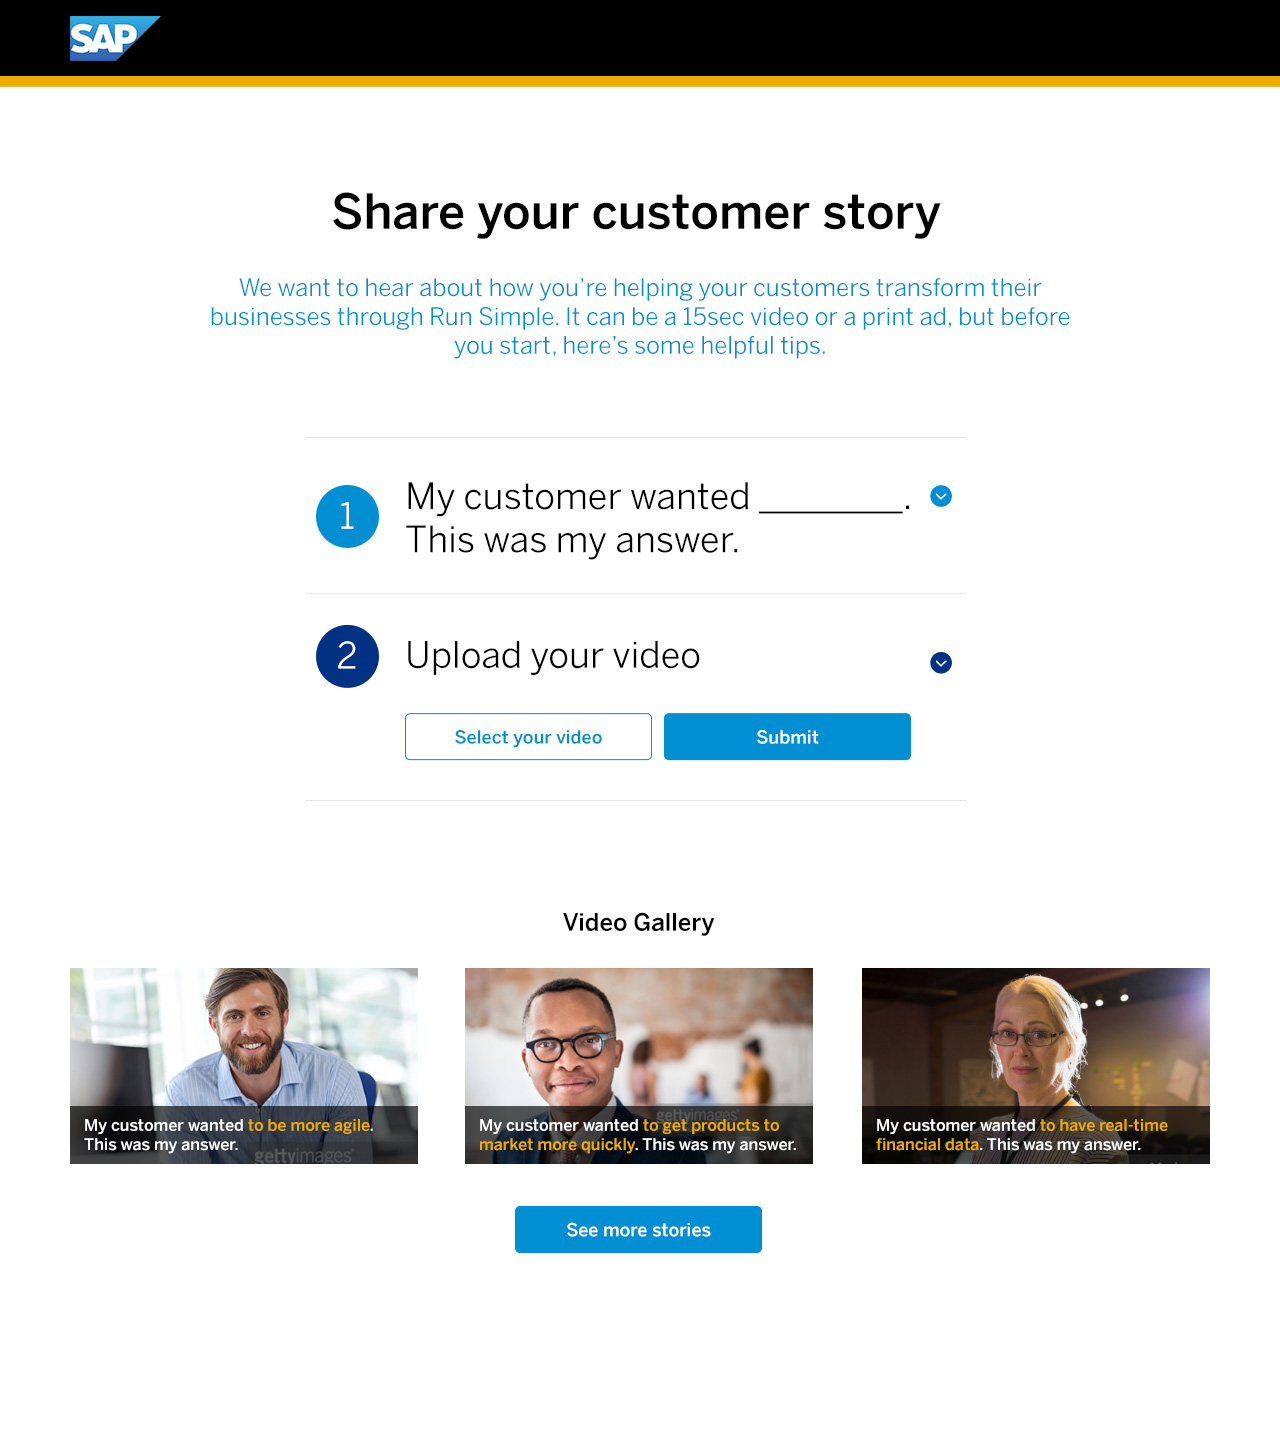 SAP Campaign Mockup Image